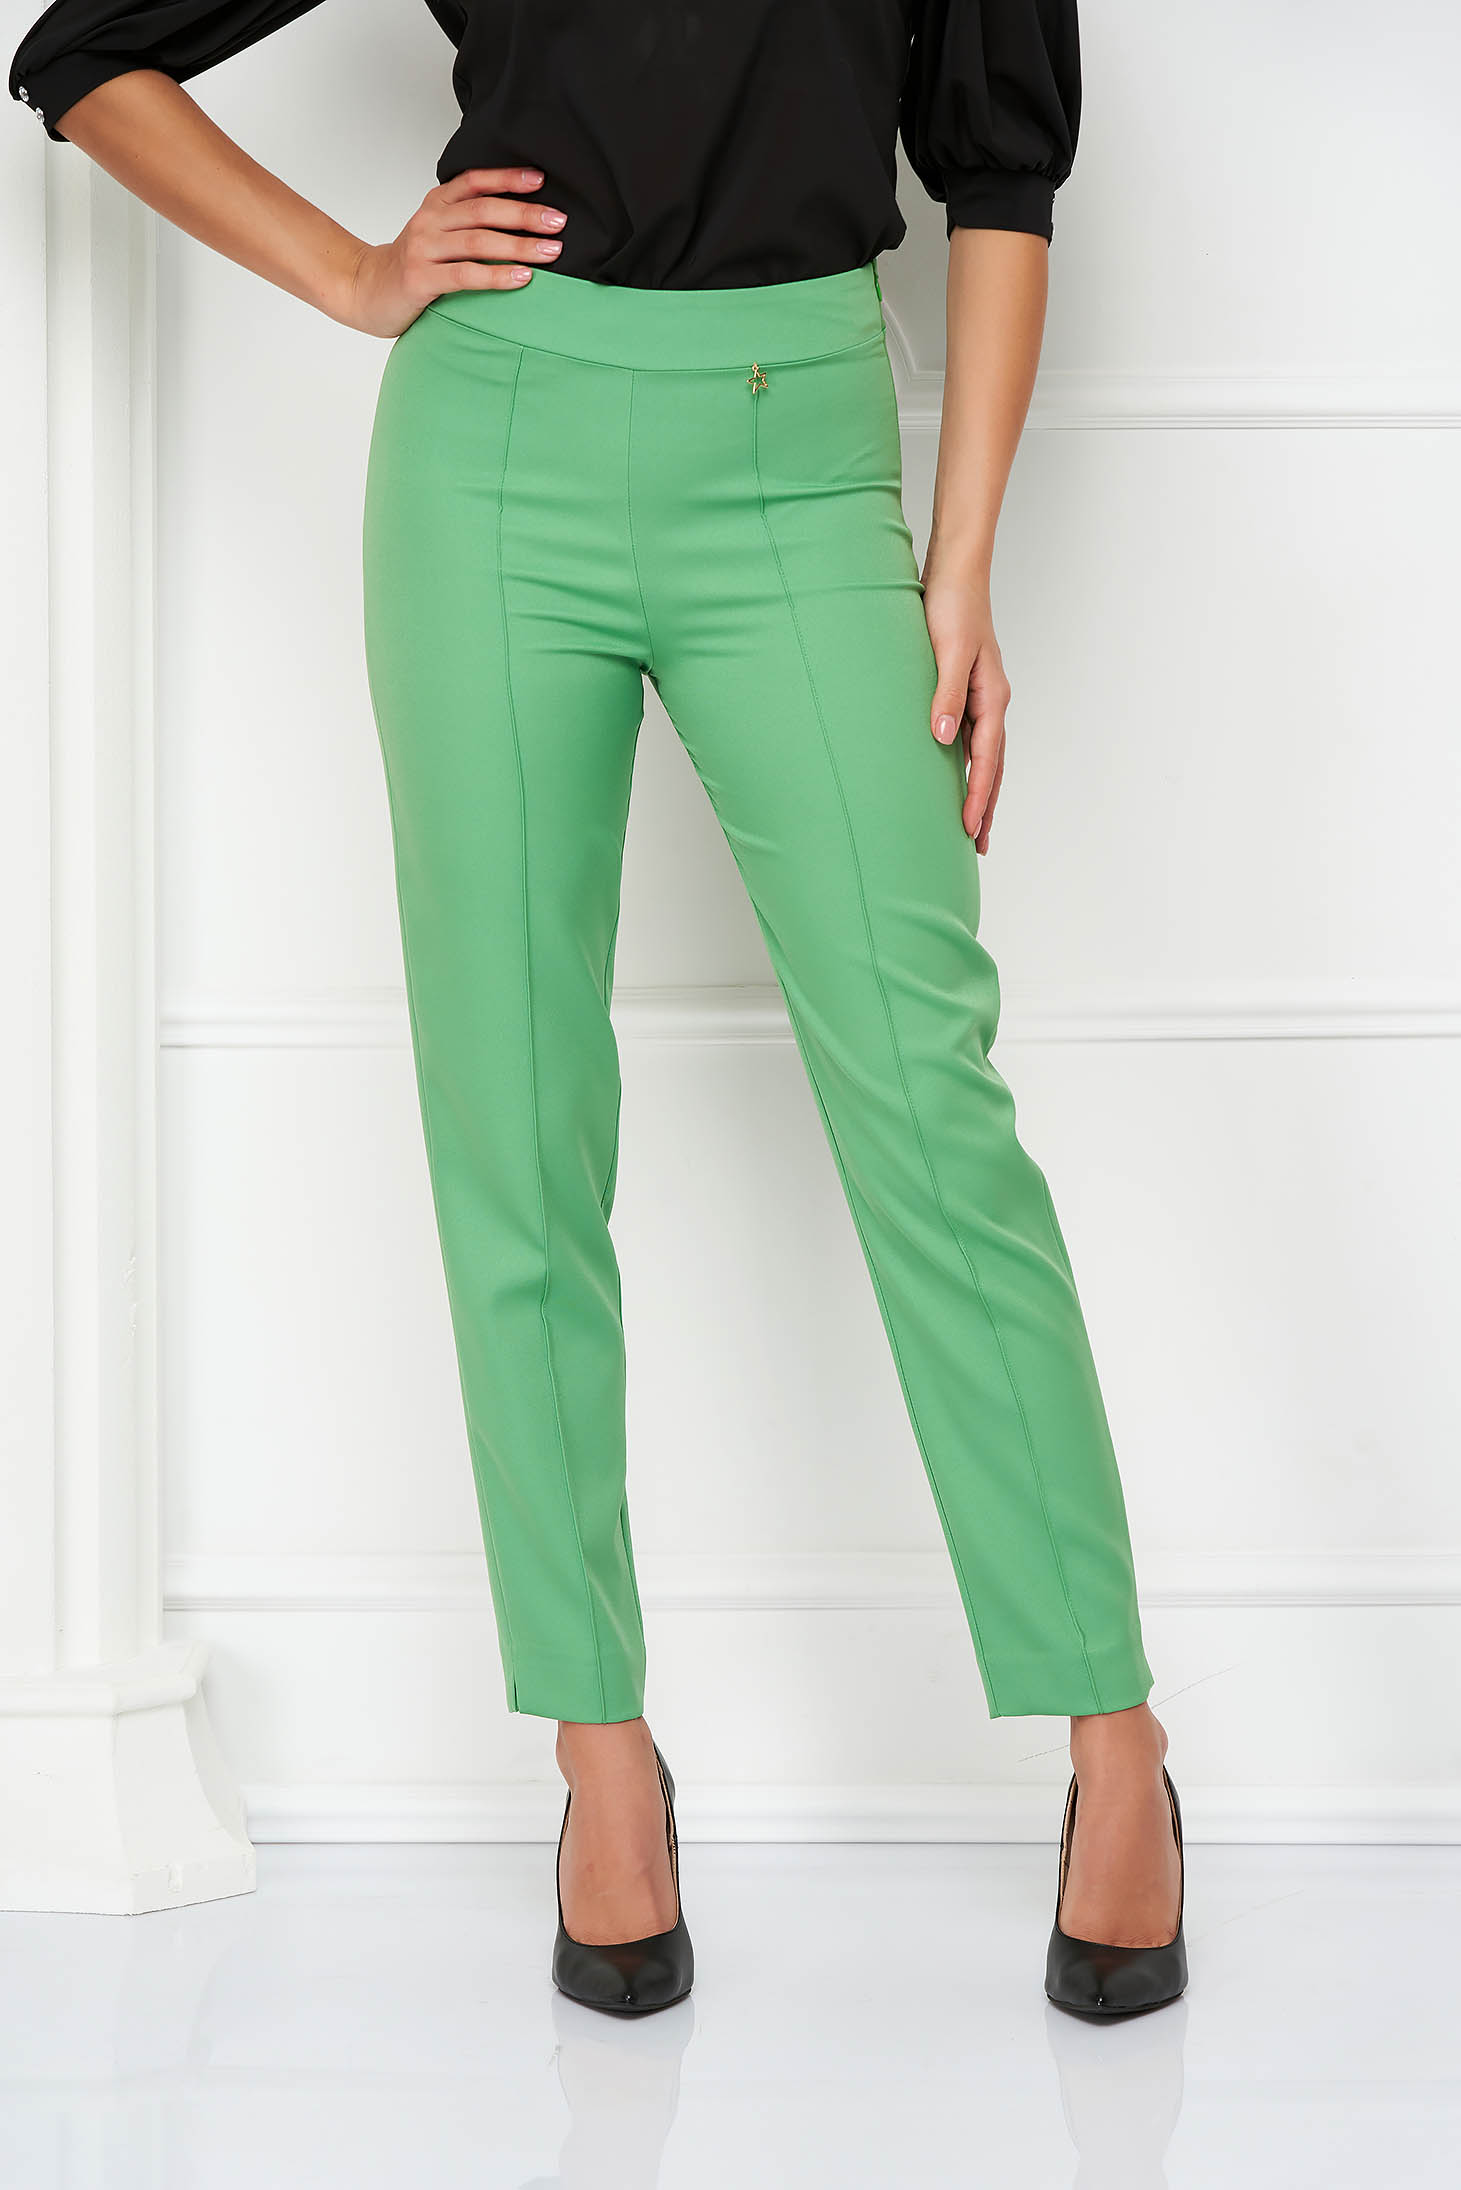 Pantaloni din stofa usor elastica verde-deschis conici cu talie inalta - StarShinerS 1 - StarShinerS.ro